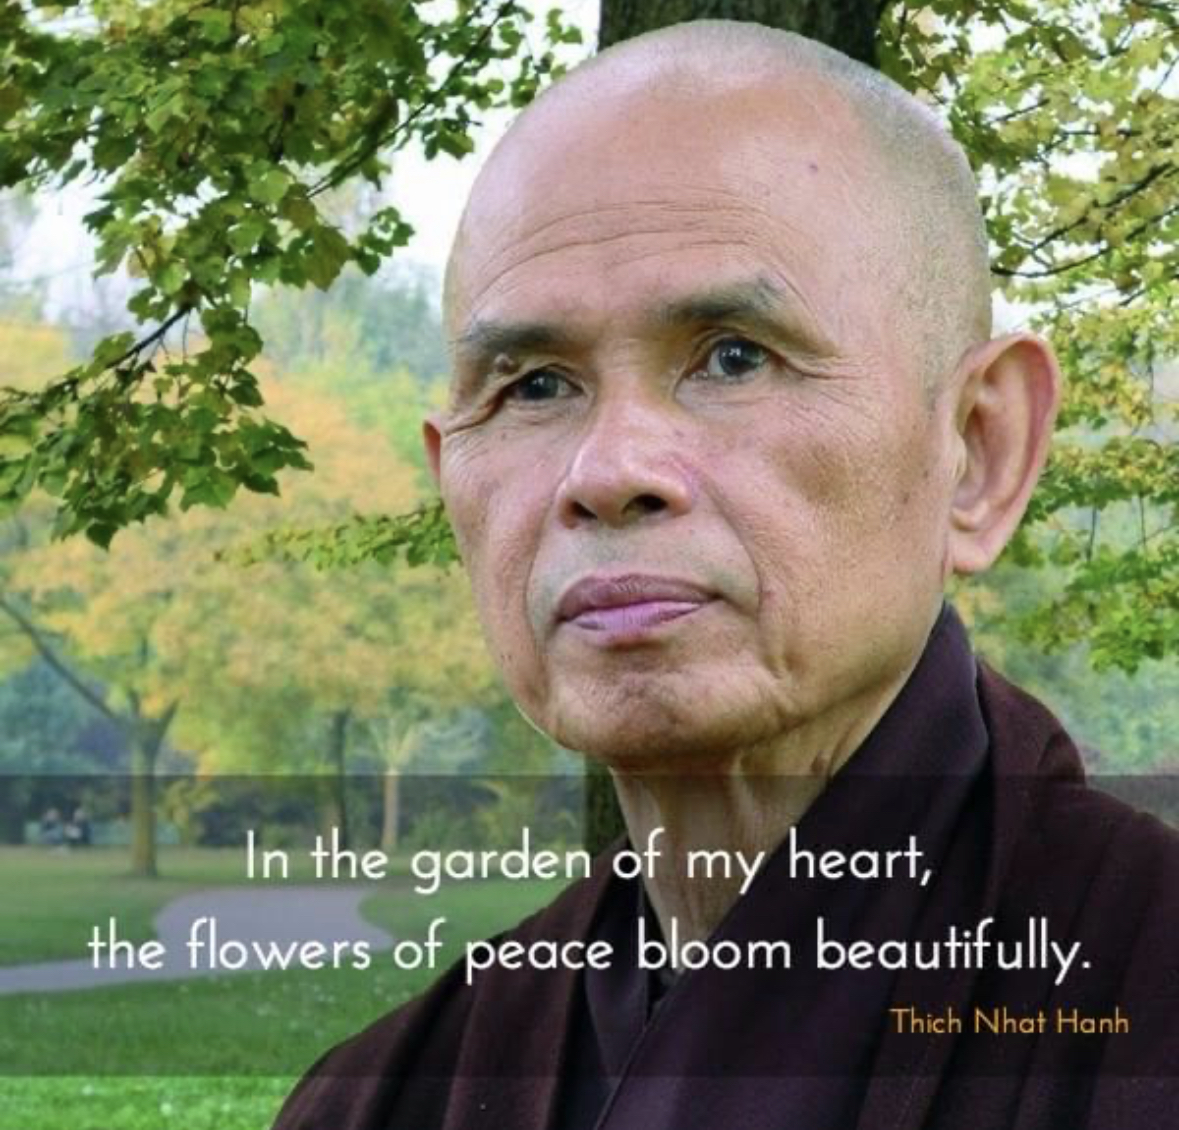 Words of wisdom from Thich Nhat Hanh:
In the garden of my heart, the flowers of peace bloom beautifully.

#ThichNhatHanh #LamaSuryaDas #Dzogchen #Meditation  #Mindfulness #SelfInquiry #NonDual  #Buddhism #Healing #Wellness #Yoga  #Dharma #AwakeningtheBuddhaWithin #HowtoHeal